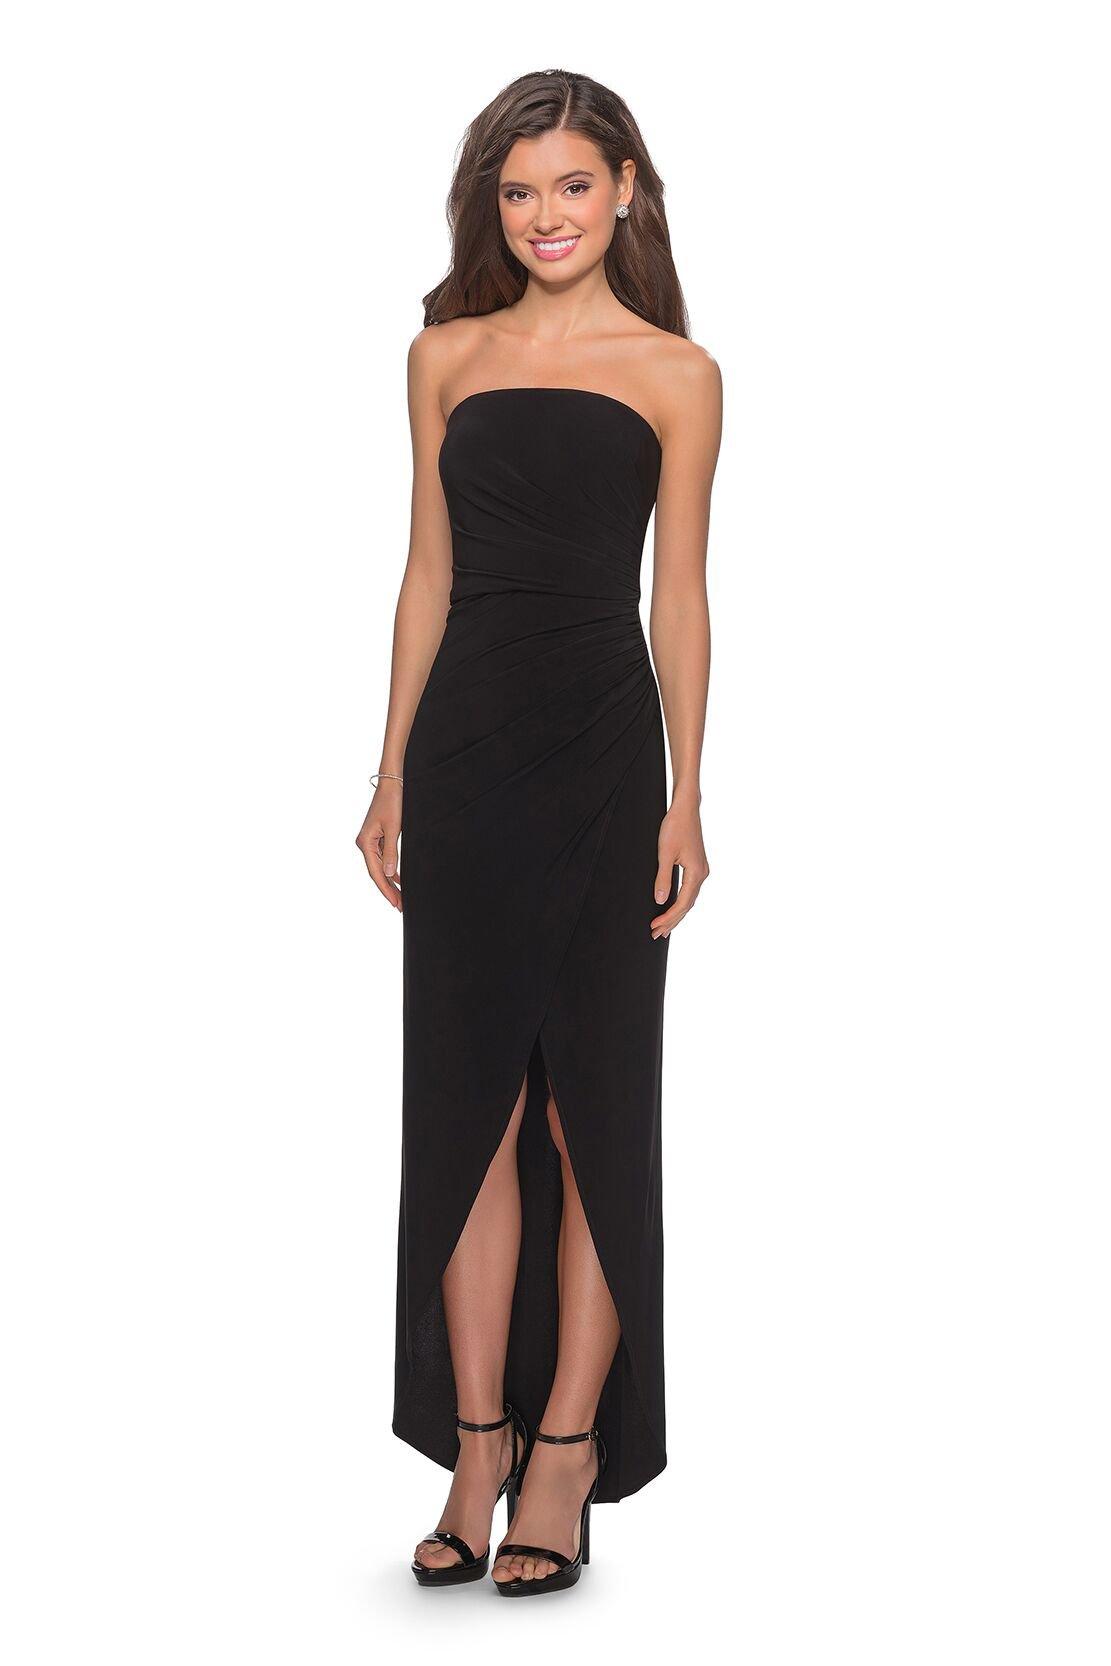 La Femme 28204 Strapless Jersey Sheath Dress With Slit in Black - Lyst